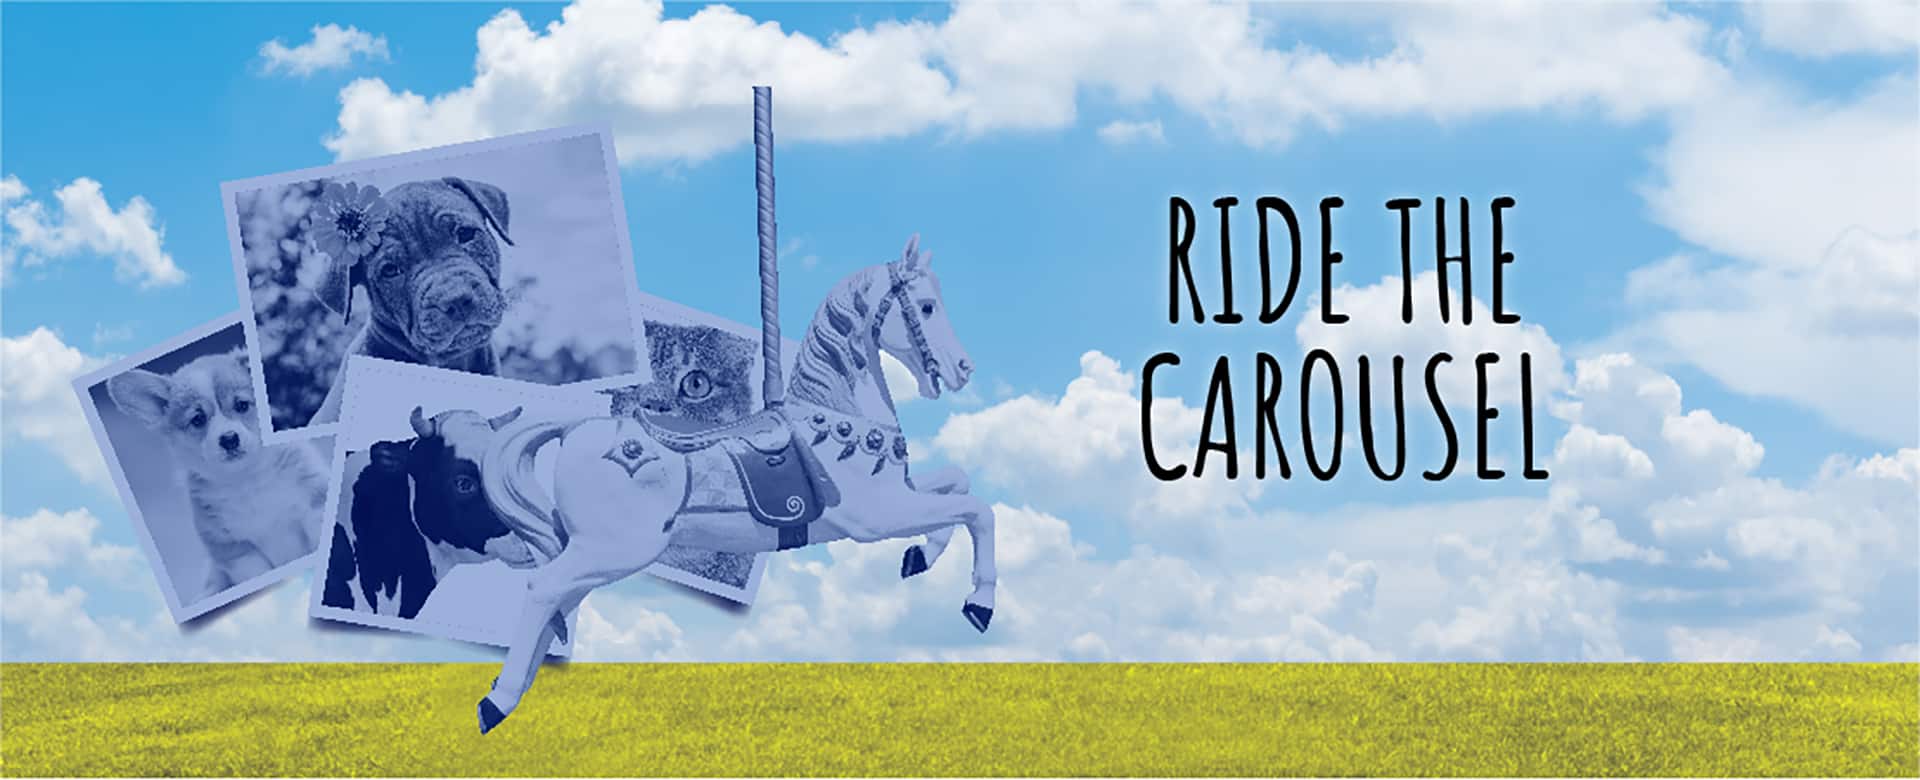 Ride The Carousel